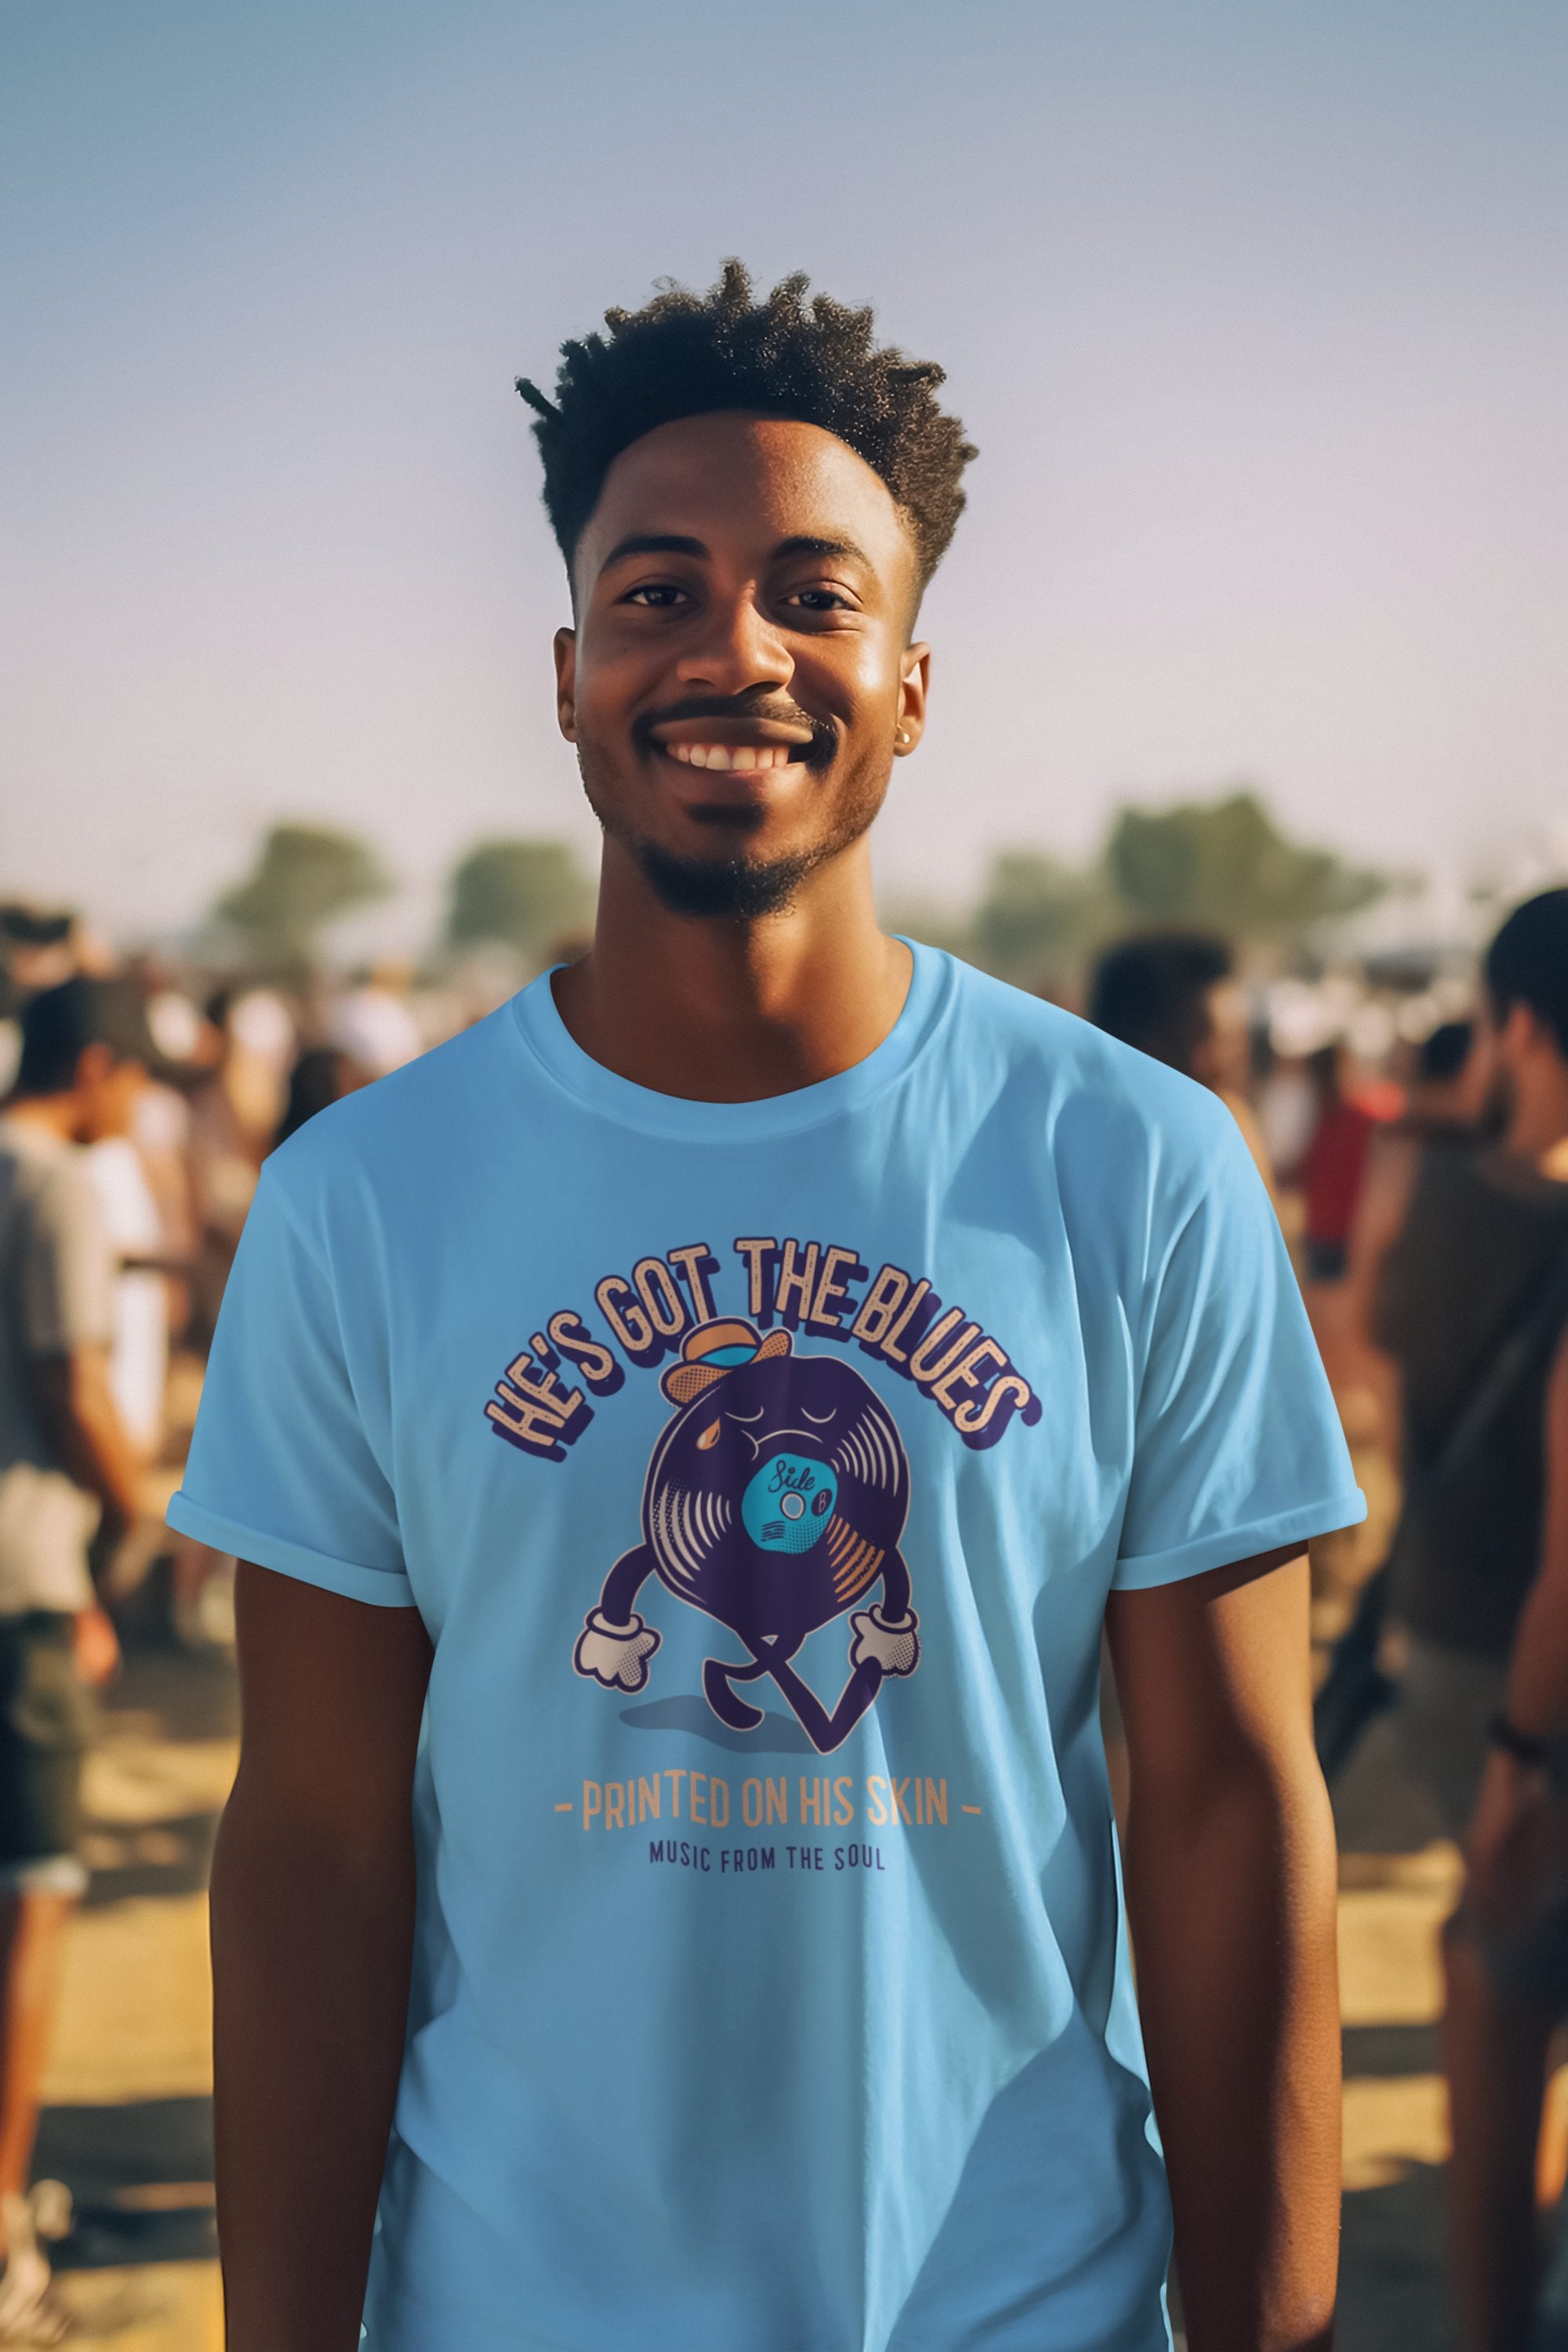 Black man wearing blue retro style "the blues" themed t-shirt.